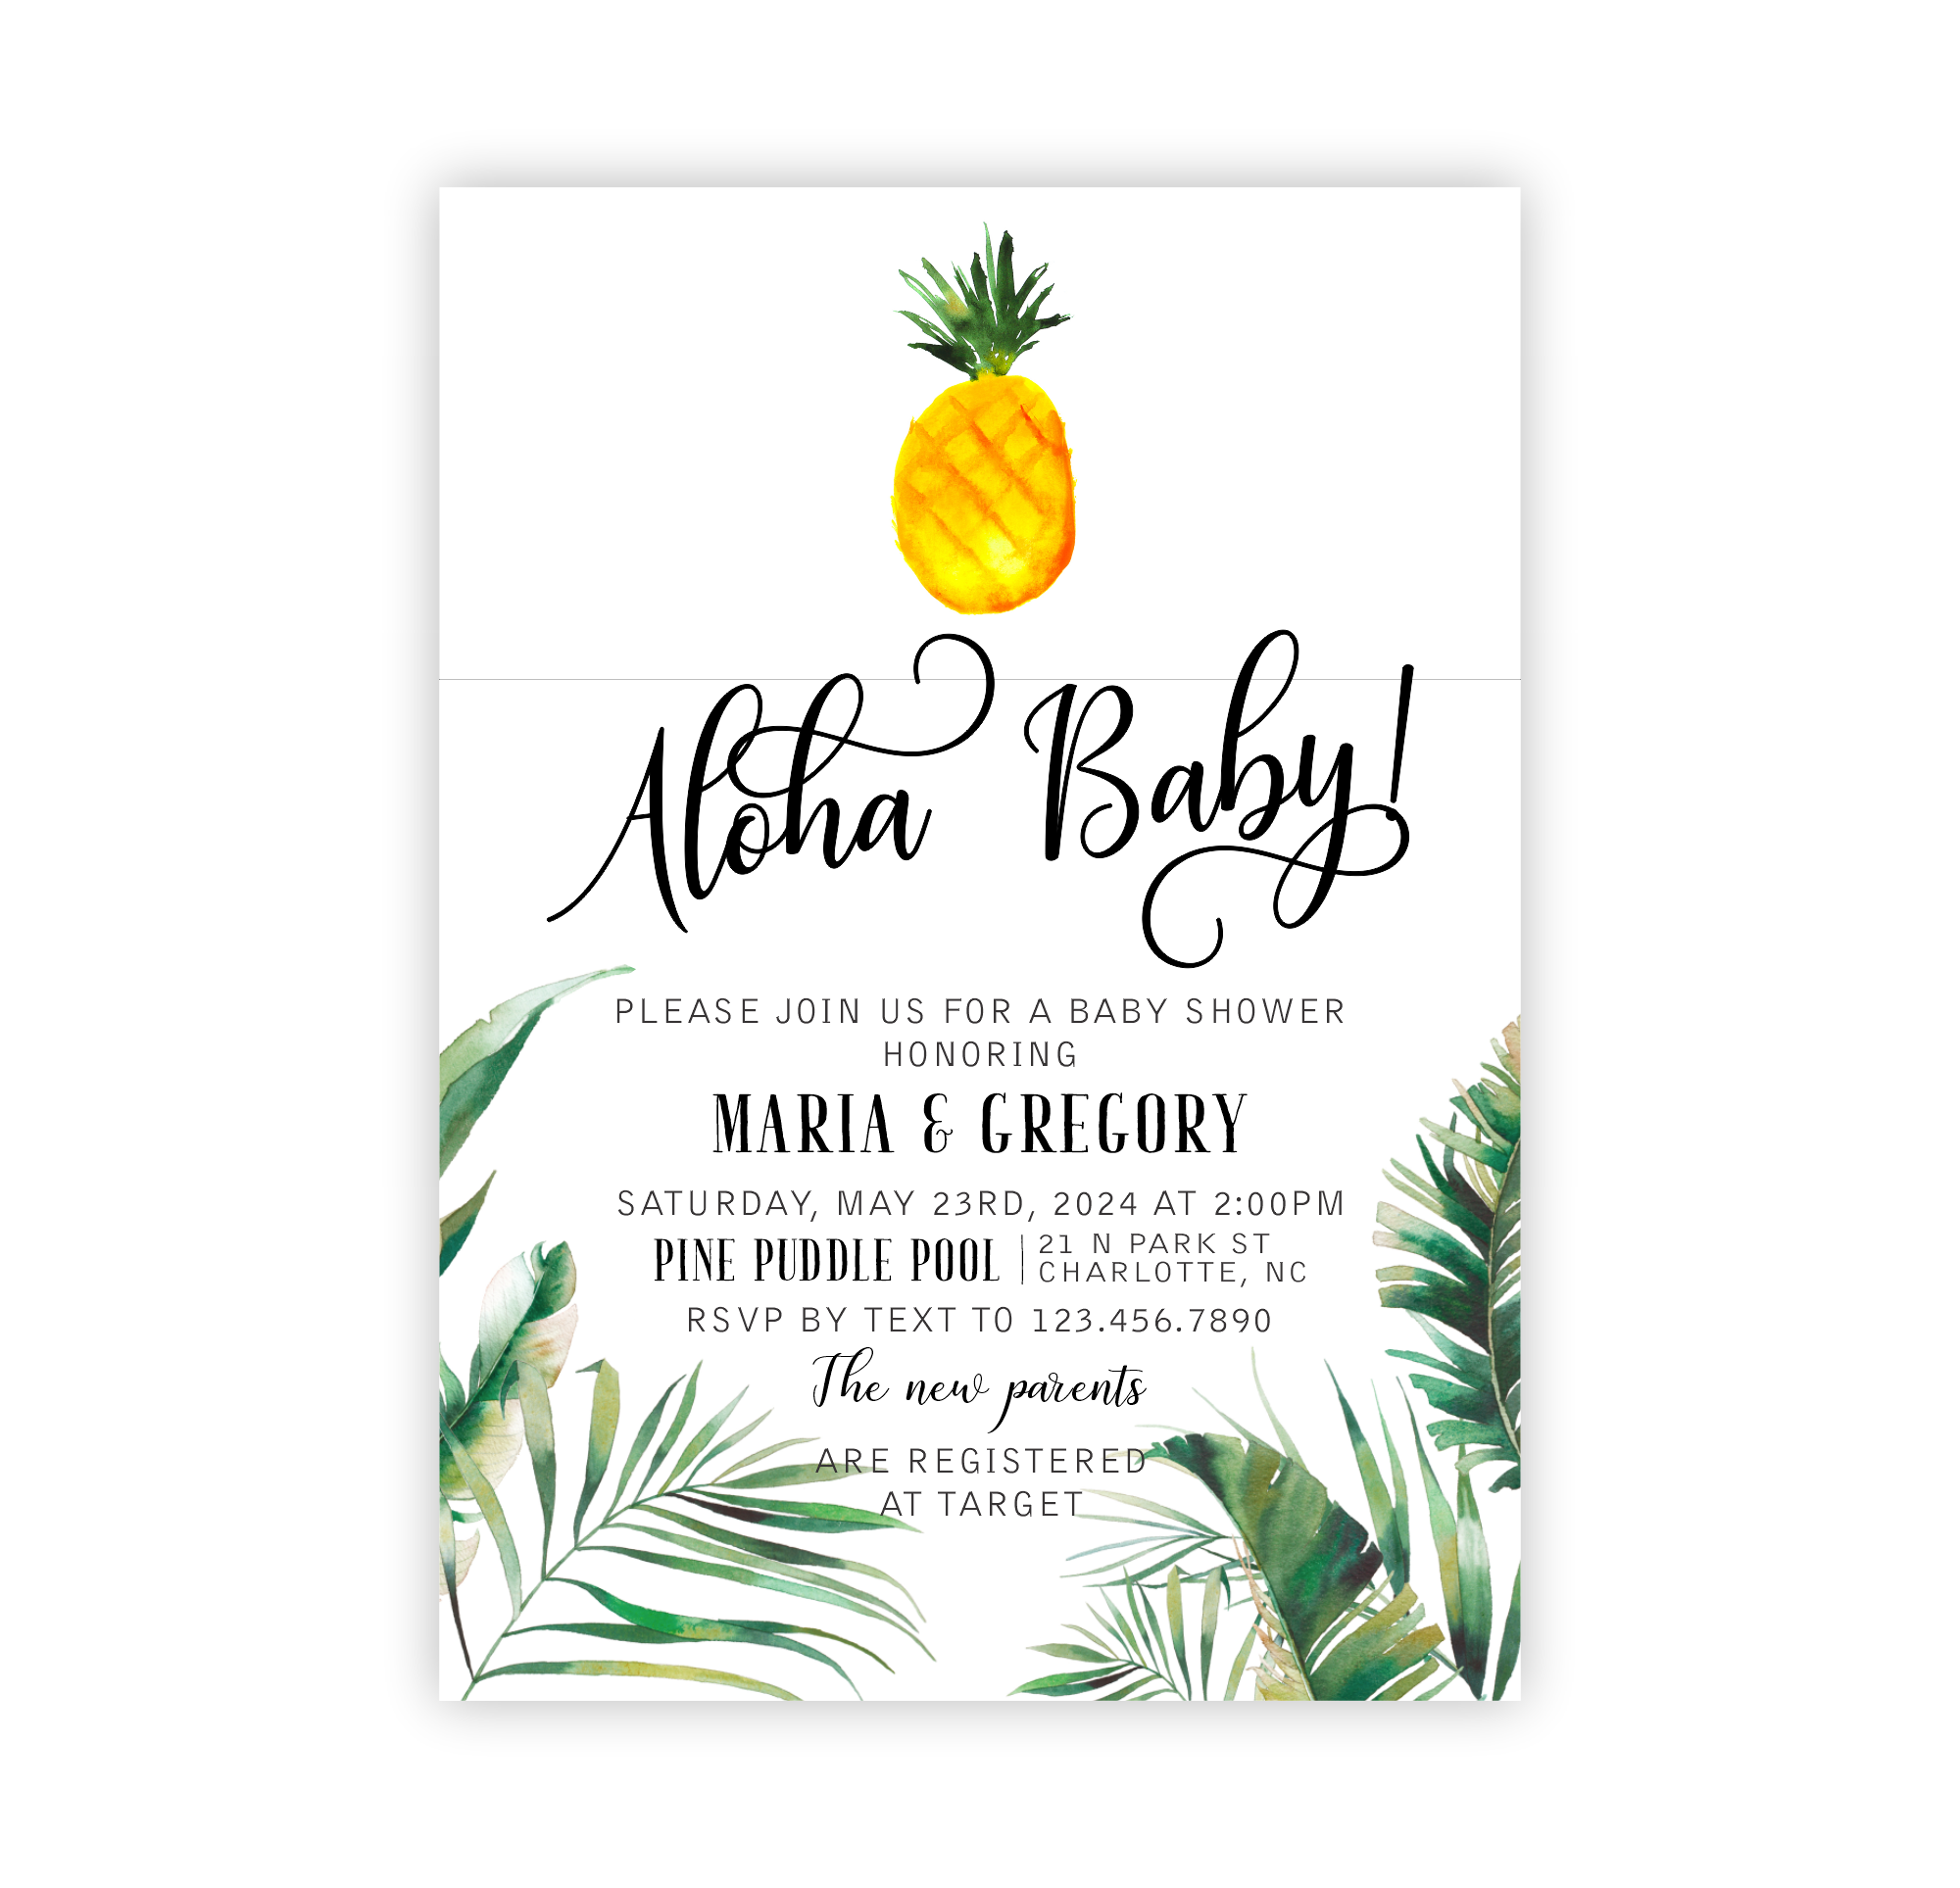 Aloha Baby | Baby Shower Invite